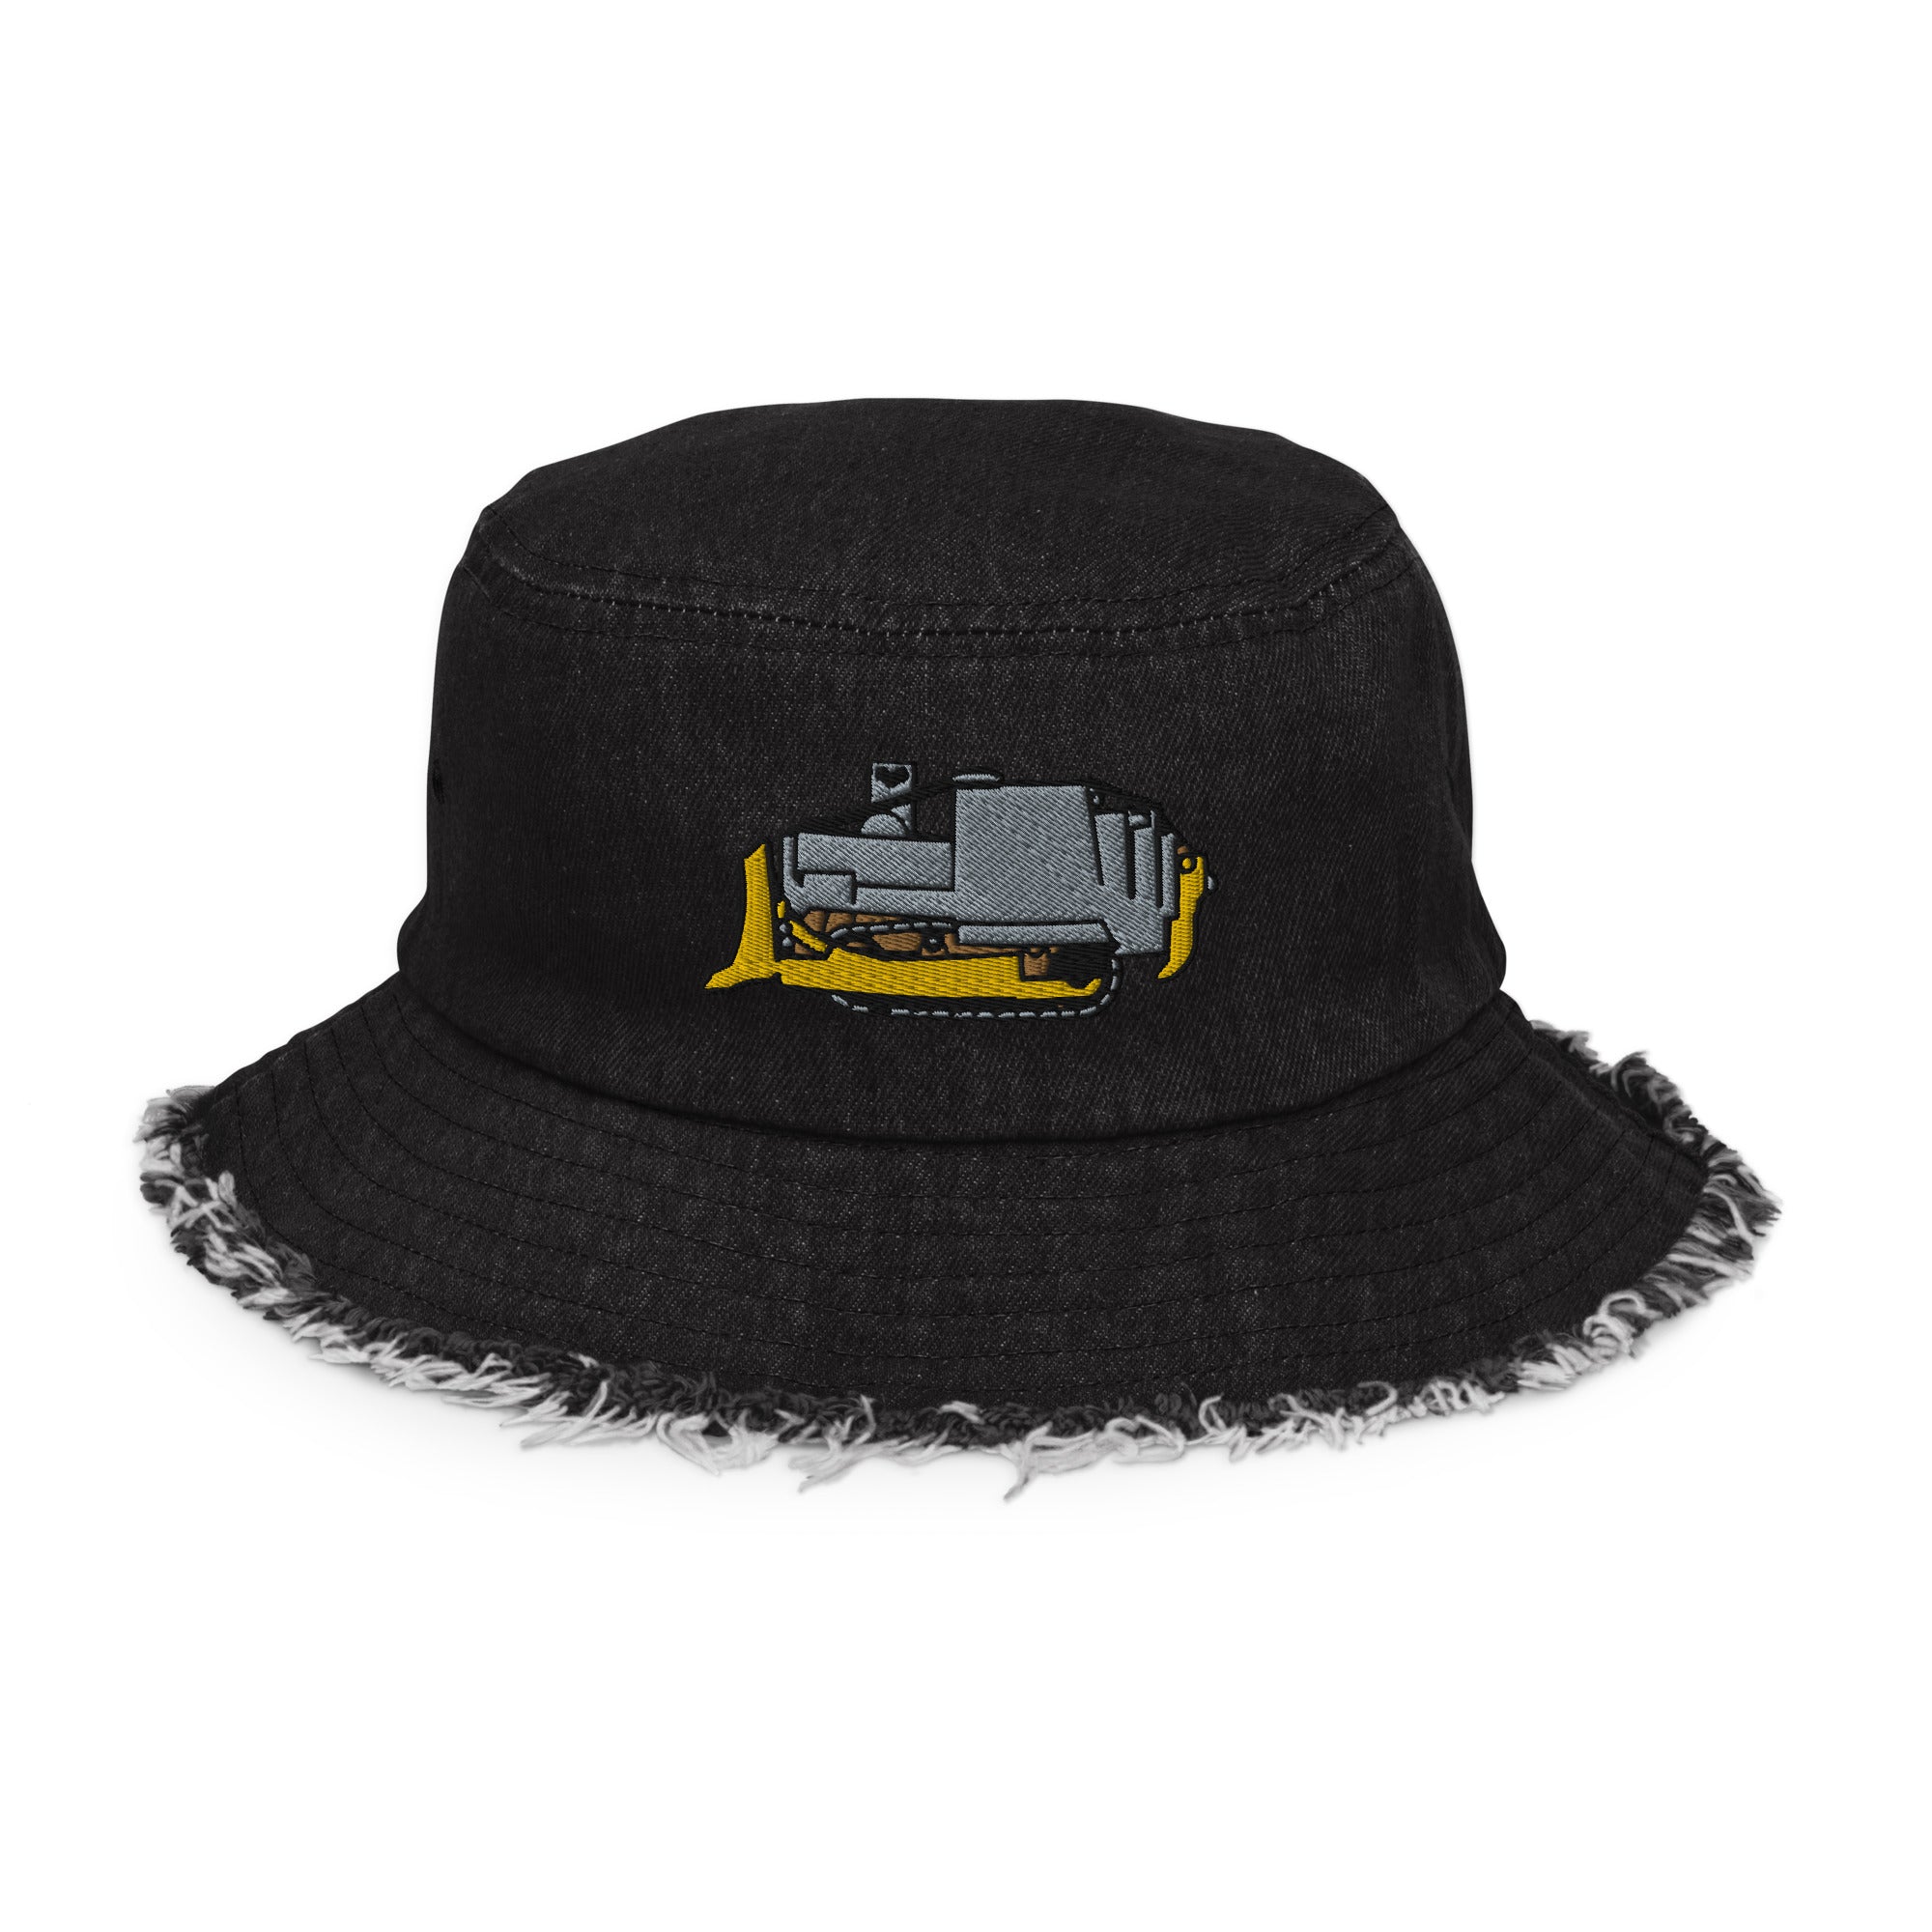 Killdozer Distressed Denim Bucket Hat